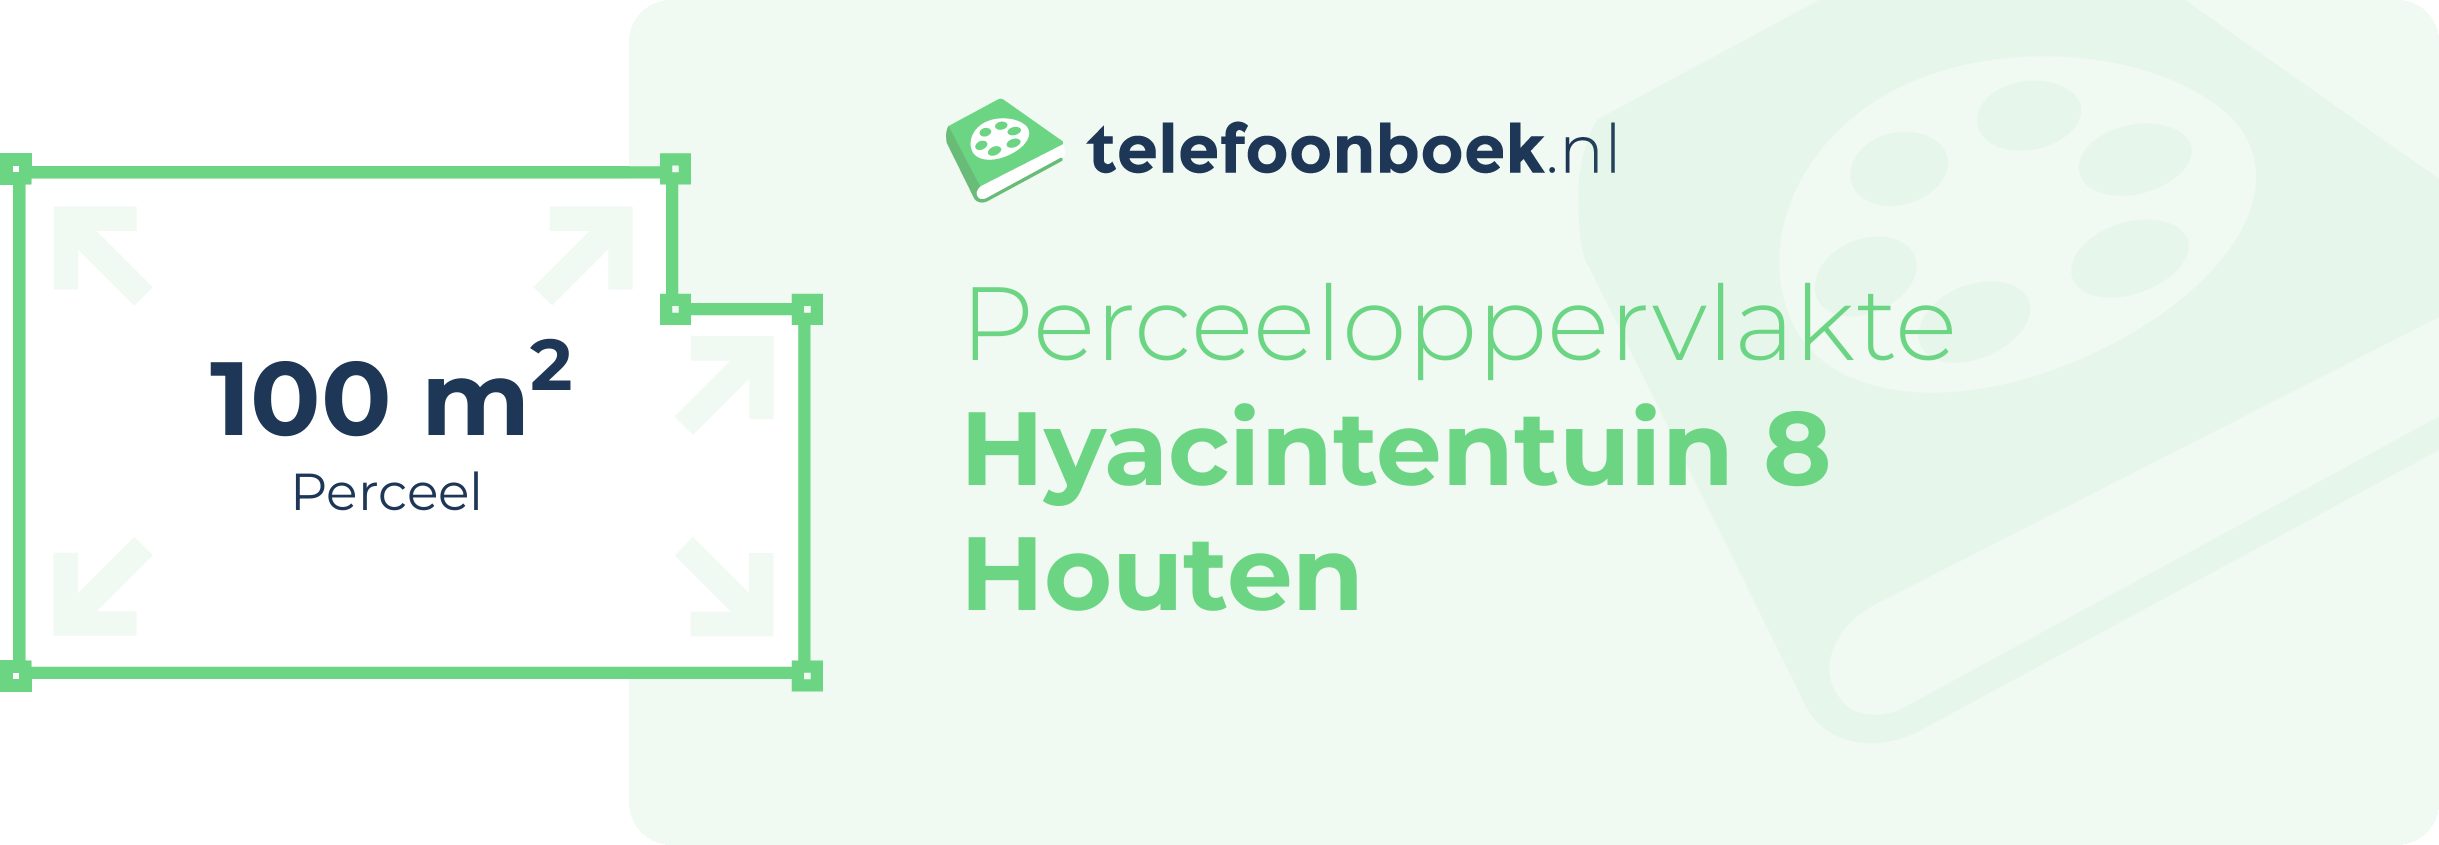 Perceeloppervlakte Hyacintentuin 8 Houten